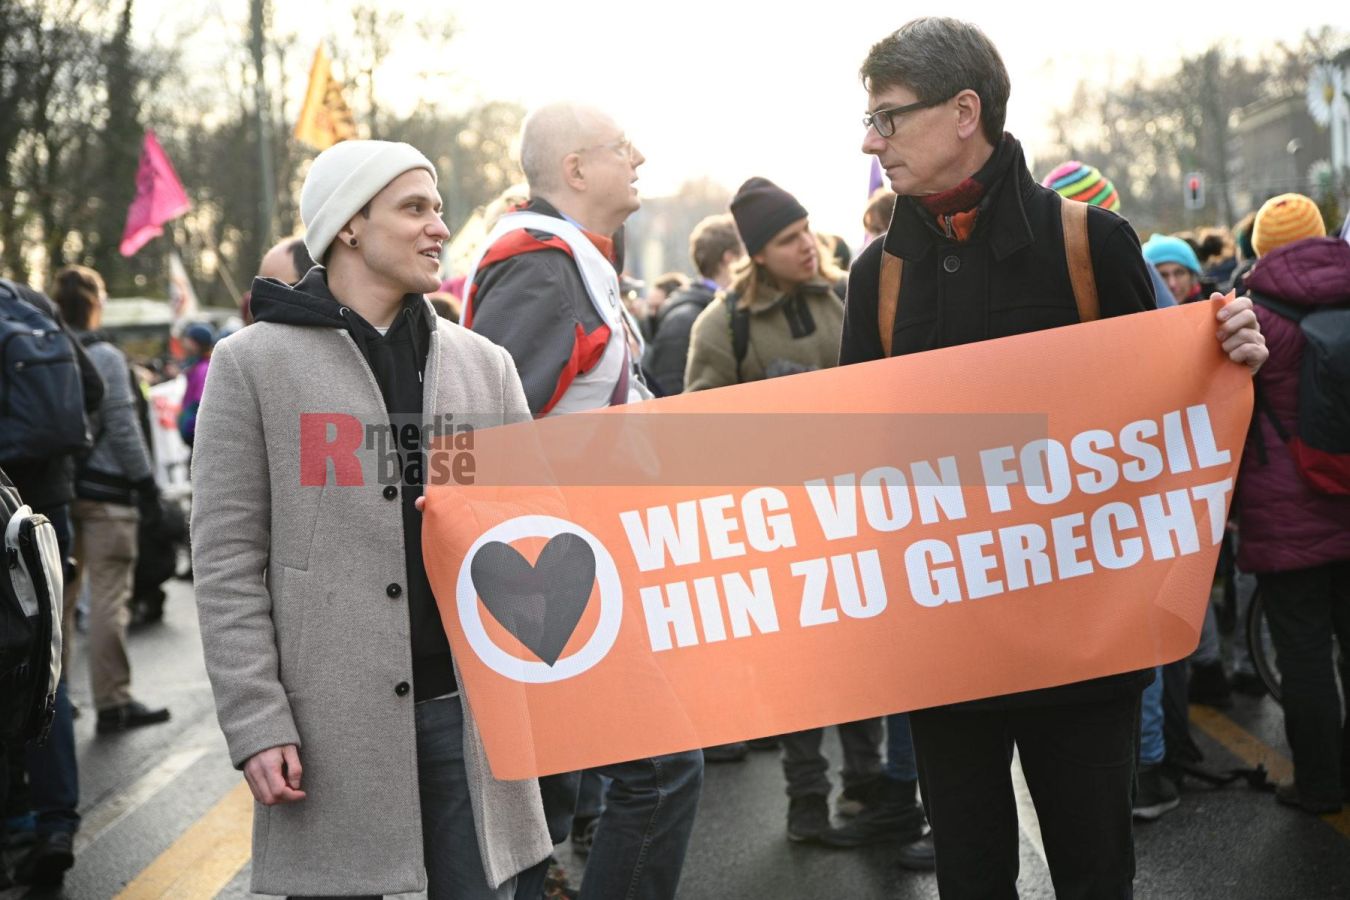 Bunter Protest in Berlin gegen fossile Subventionen <i>Bild Florian Henig/R-mediabase</i> <br><a href=/confor2/?bld=79125&pst=79112&aid=608&i1=Florian%20Henig/R-mediabase>Download Bild 79125</a>  <br><a href=/?p=79112>Zum Beitrag 79112</a>